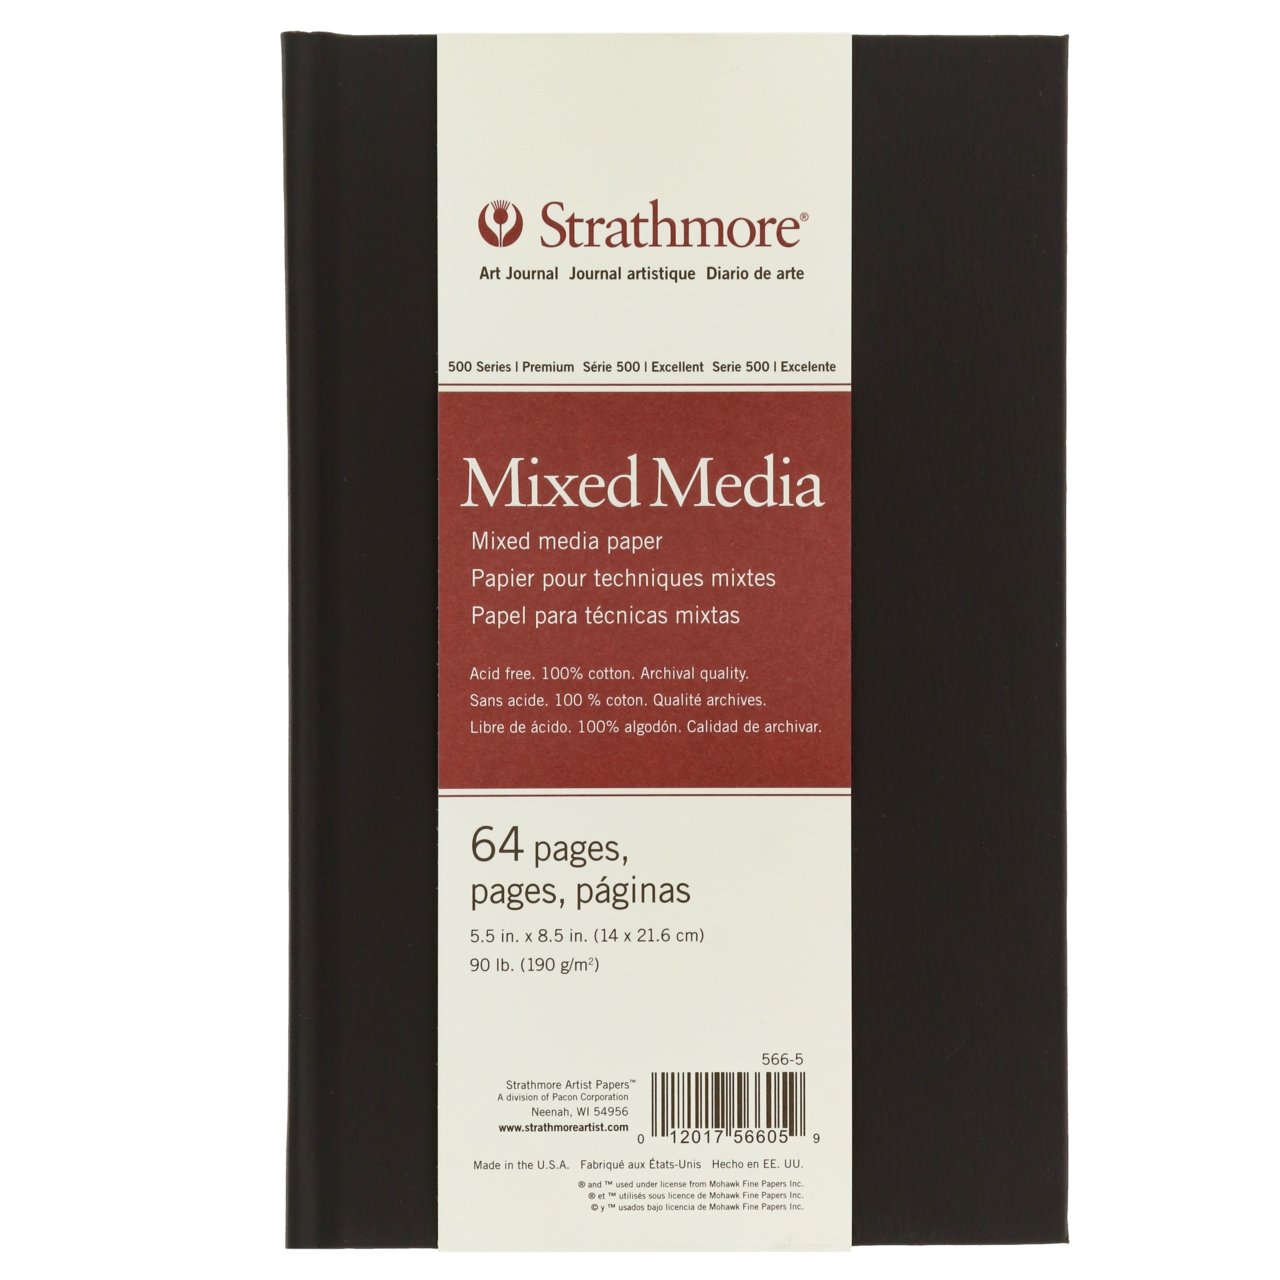 Strathmore Visual Journal Mixed Media 5.5x8